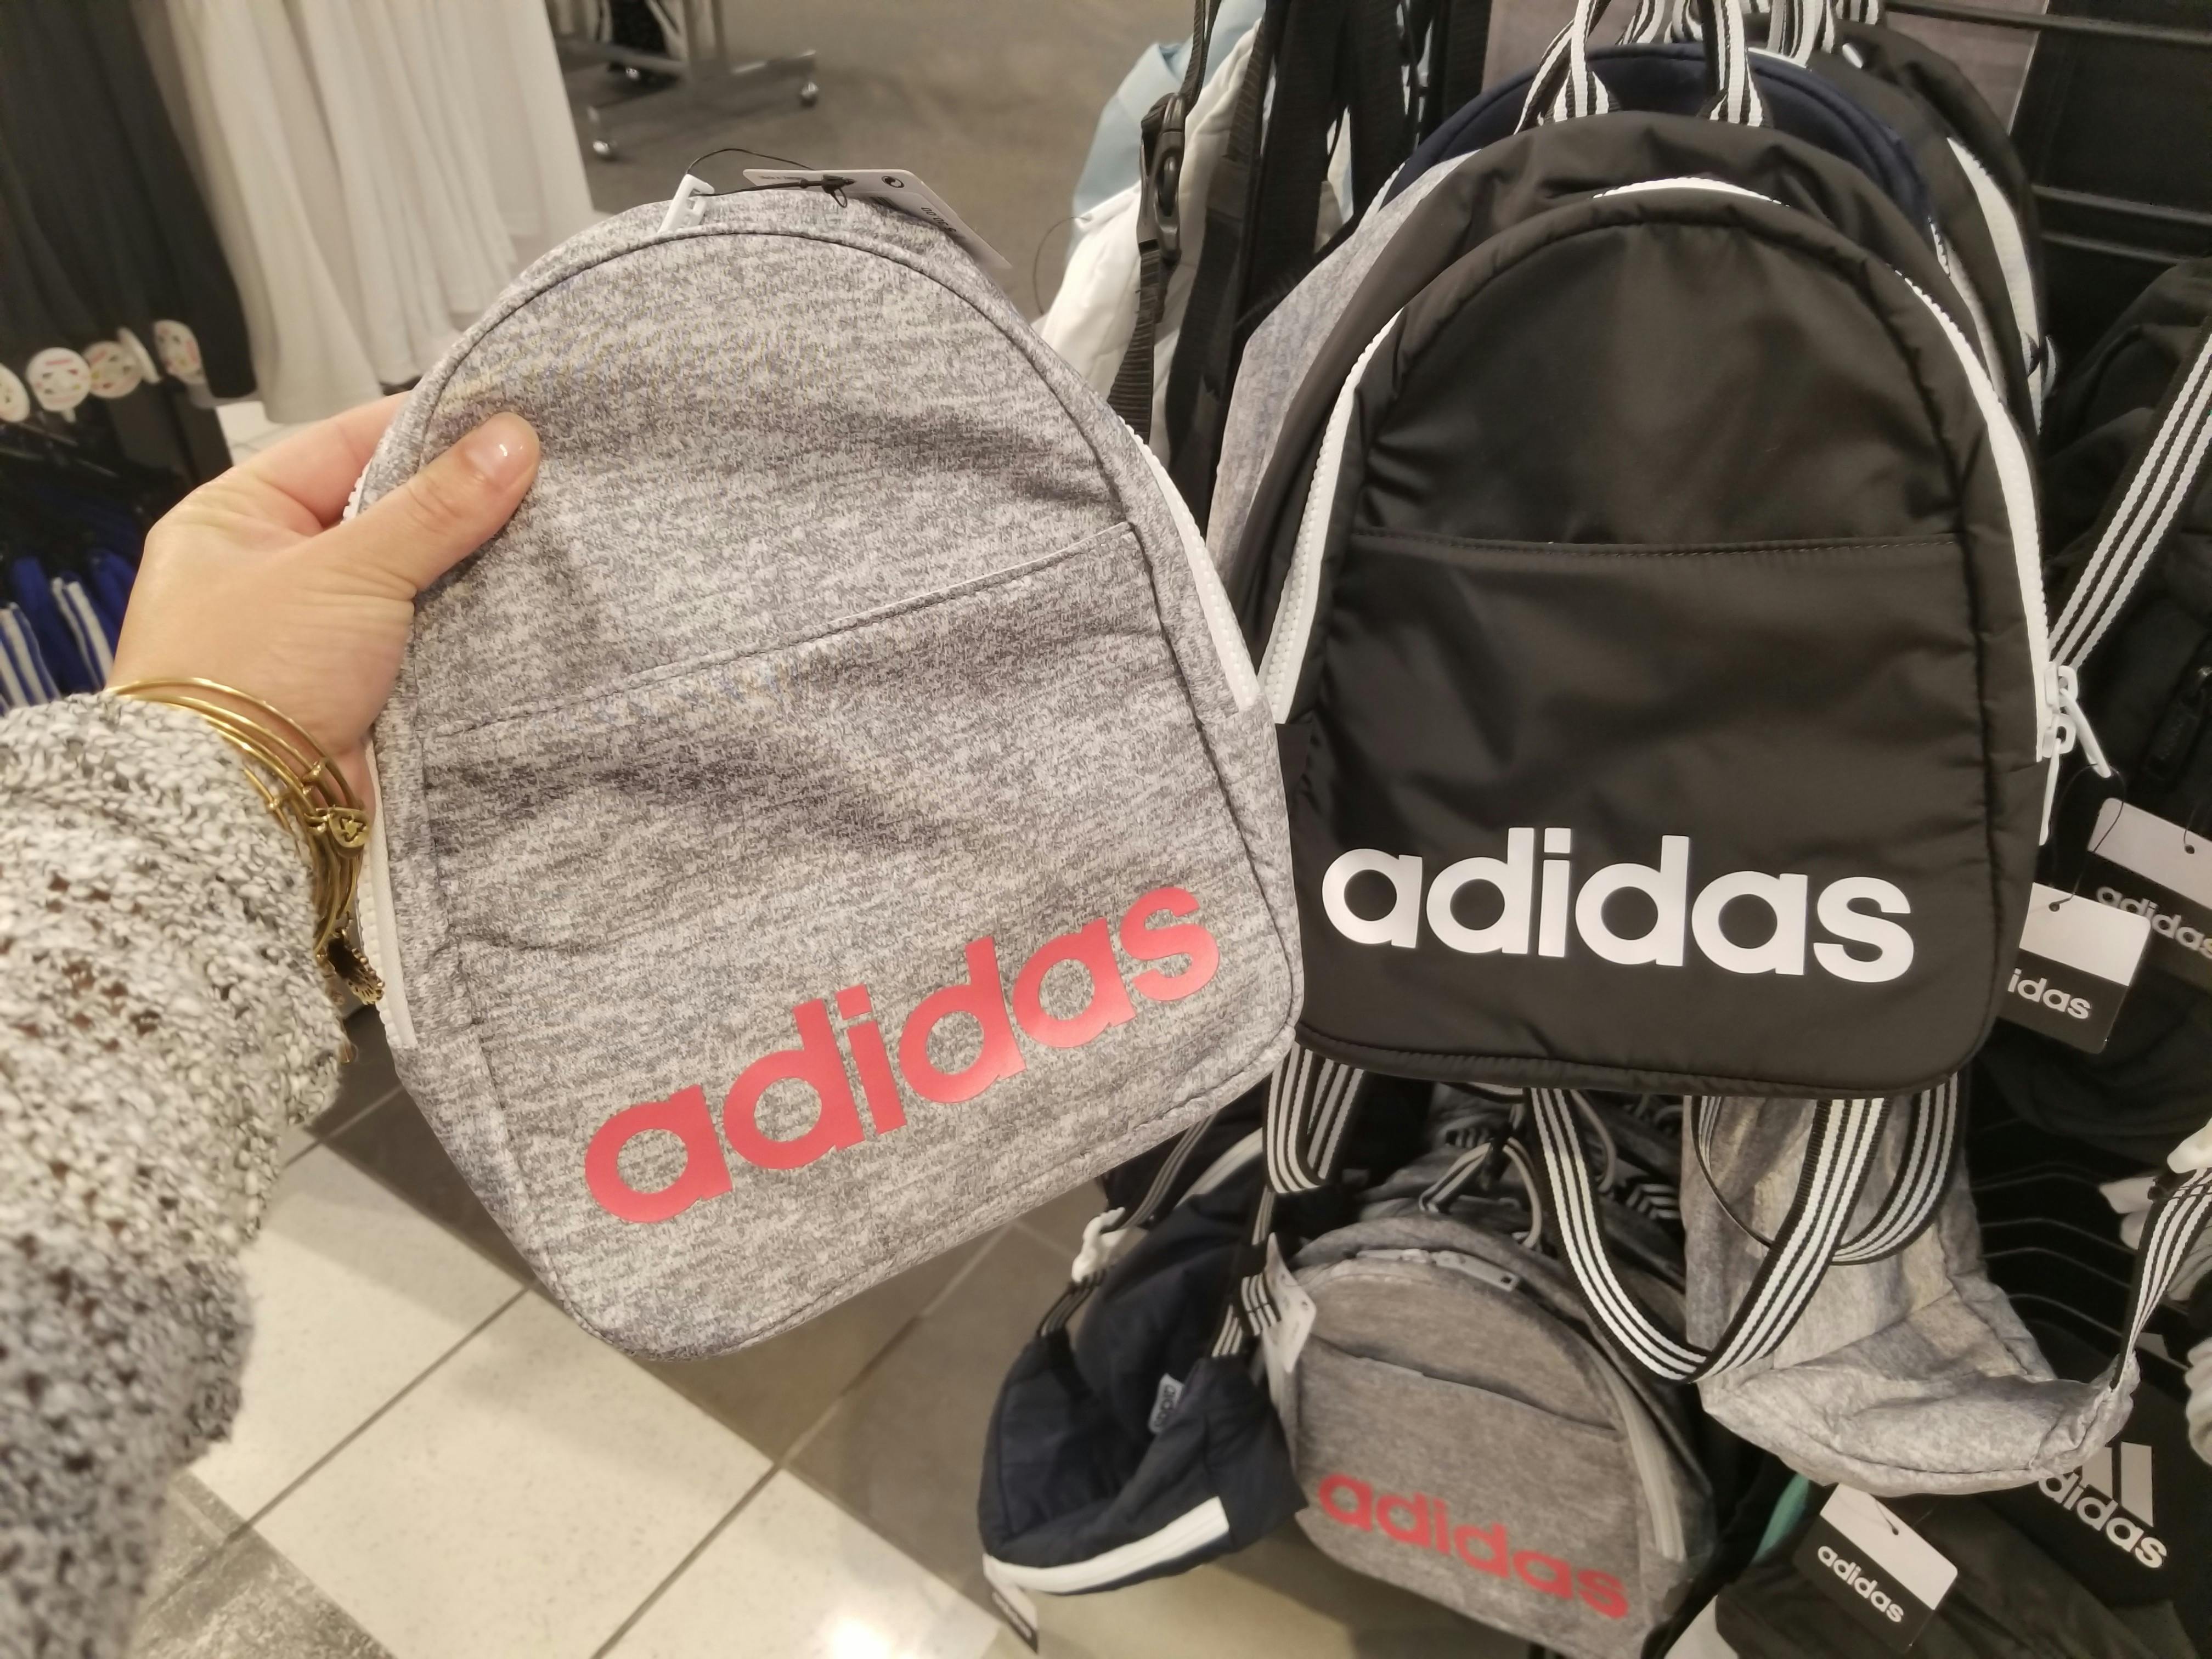 nike and adidas bags